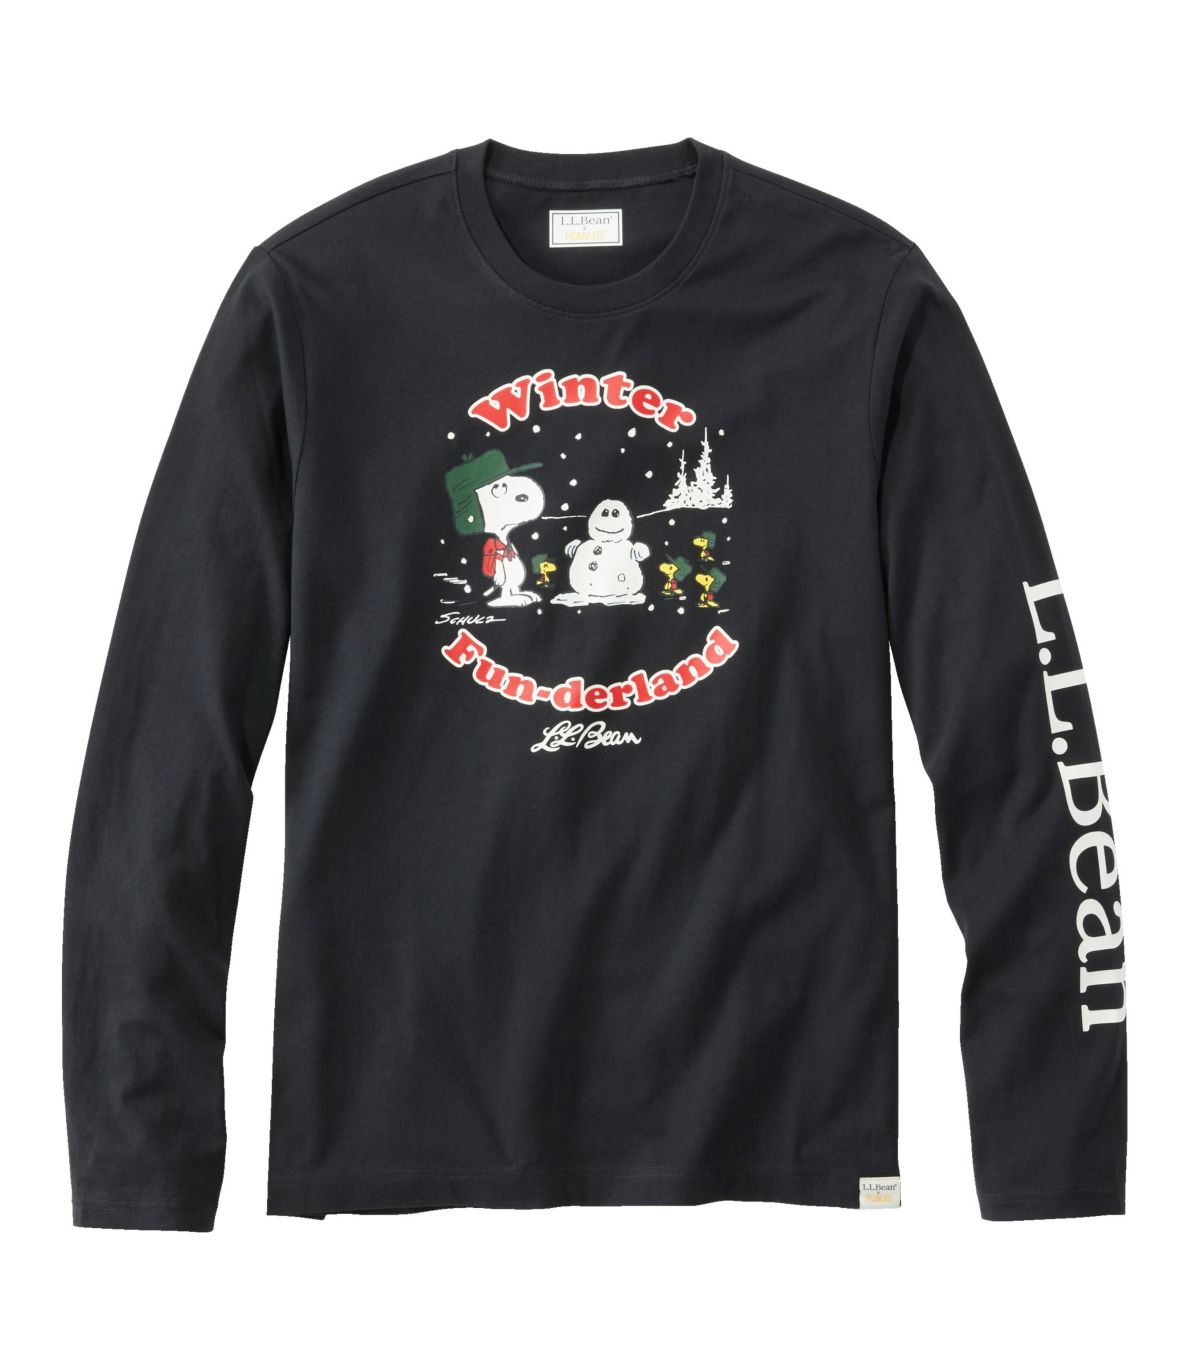 L.L.Bean x Peanuts Men's Long-Sleeve T-Shirt, Winter Fun